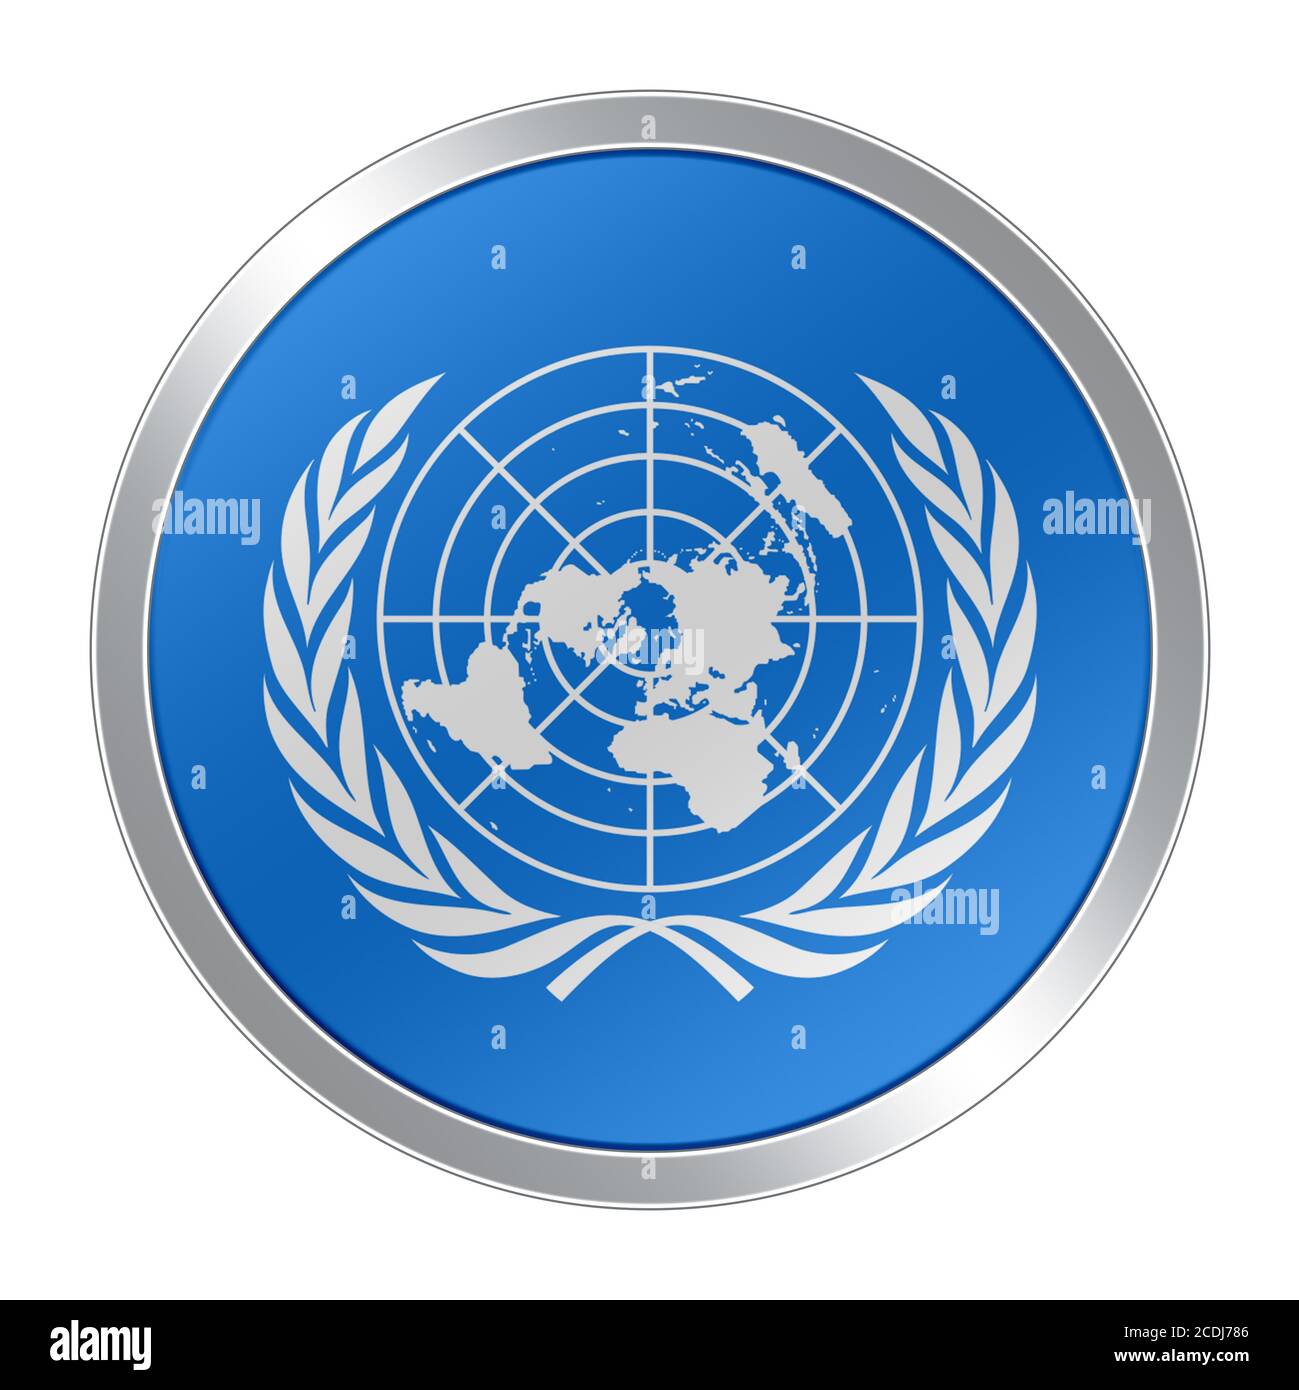 United nations logo Imágenes recortadas de stock - Alamy